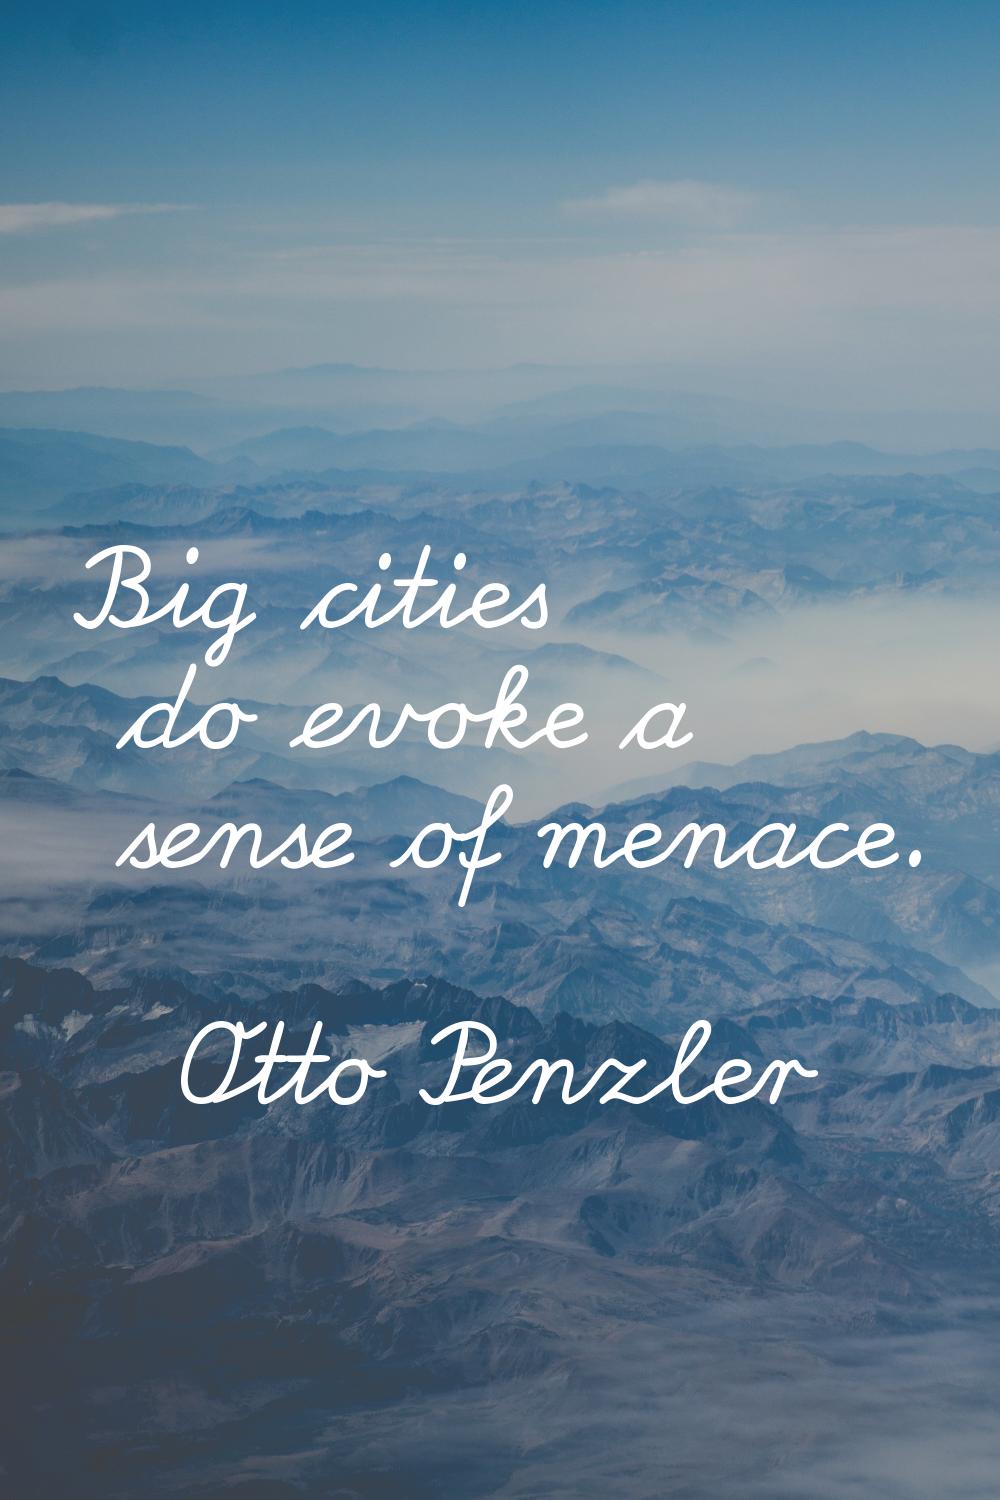 Big cities do evoke a sense of menace.